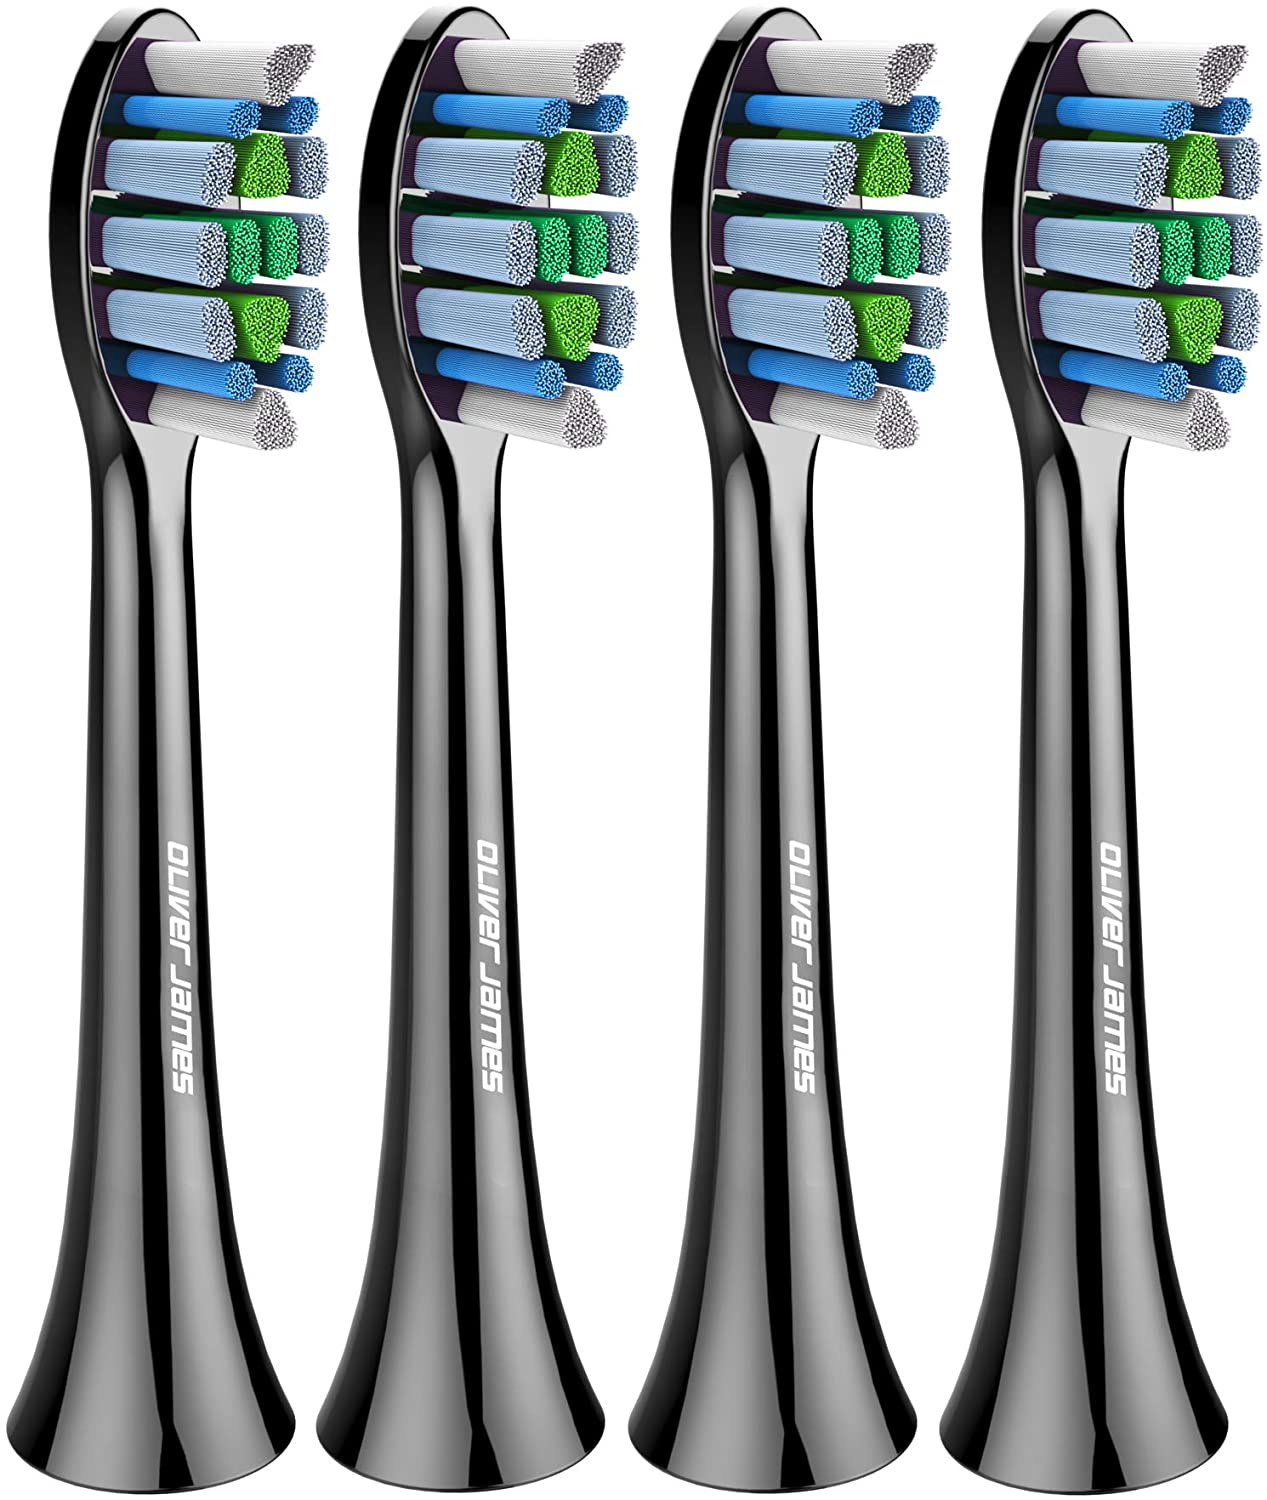 Sonic brush. Sonic Electric Toothbrush 4 насадки. Philips Sonic Toothbrush heads для электрической зубной щётки hx6064/11, Black.